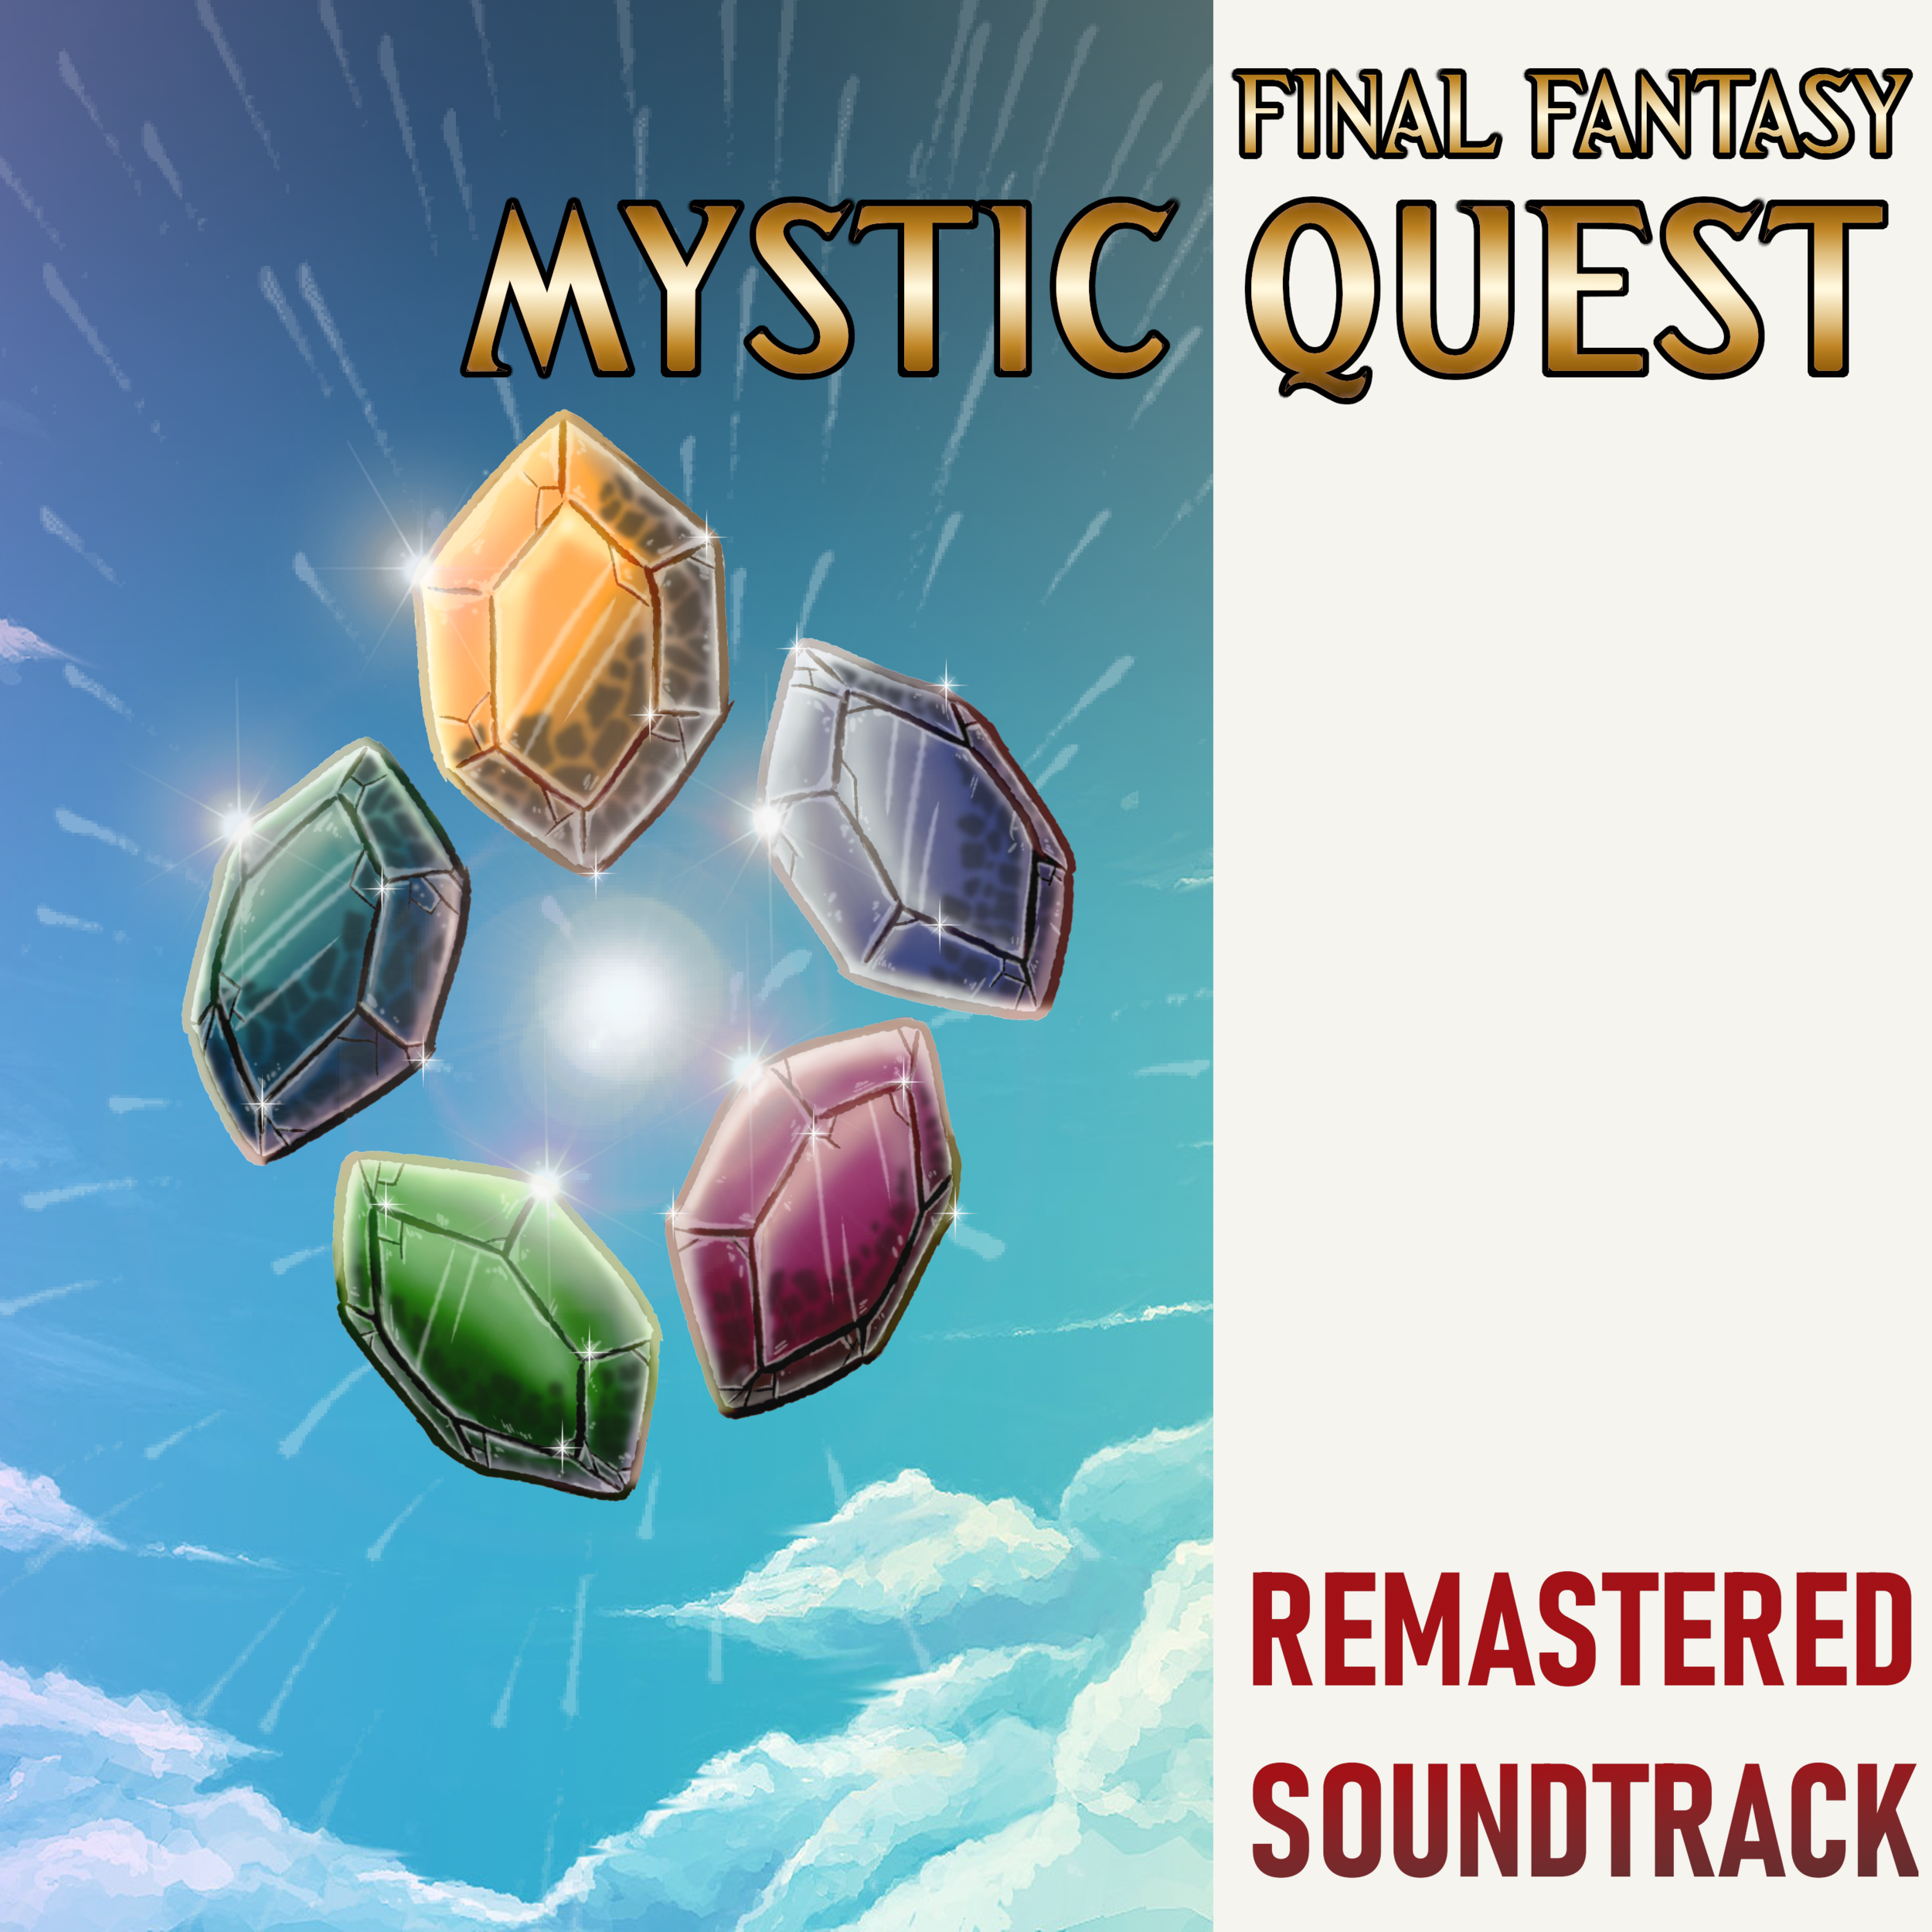 Remastered Soundtrack: Final Fantasy Mystic Quest